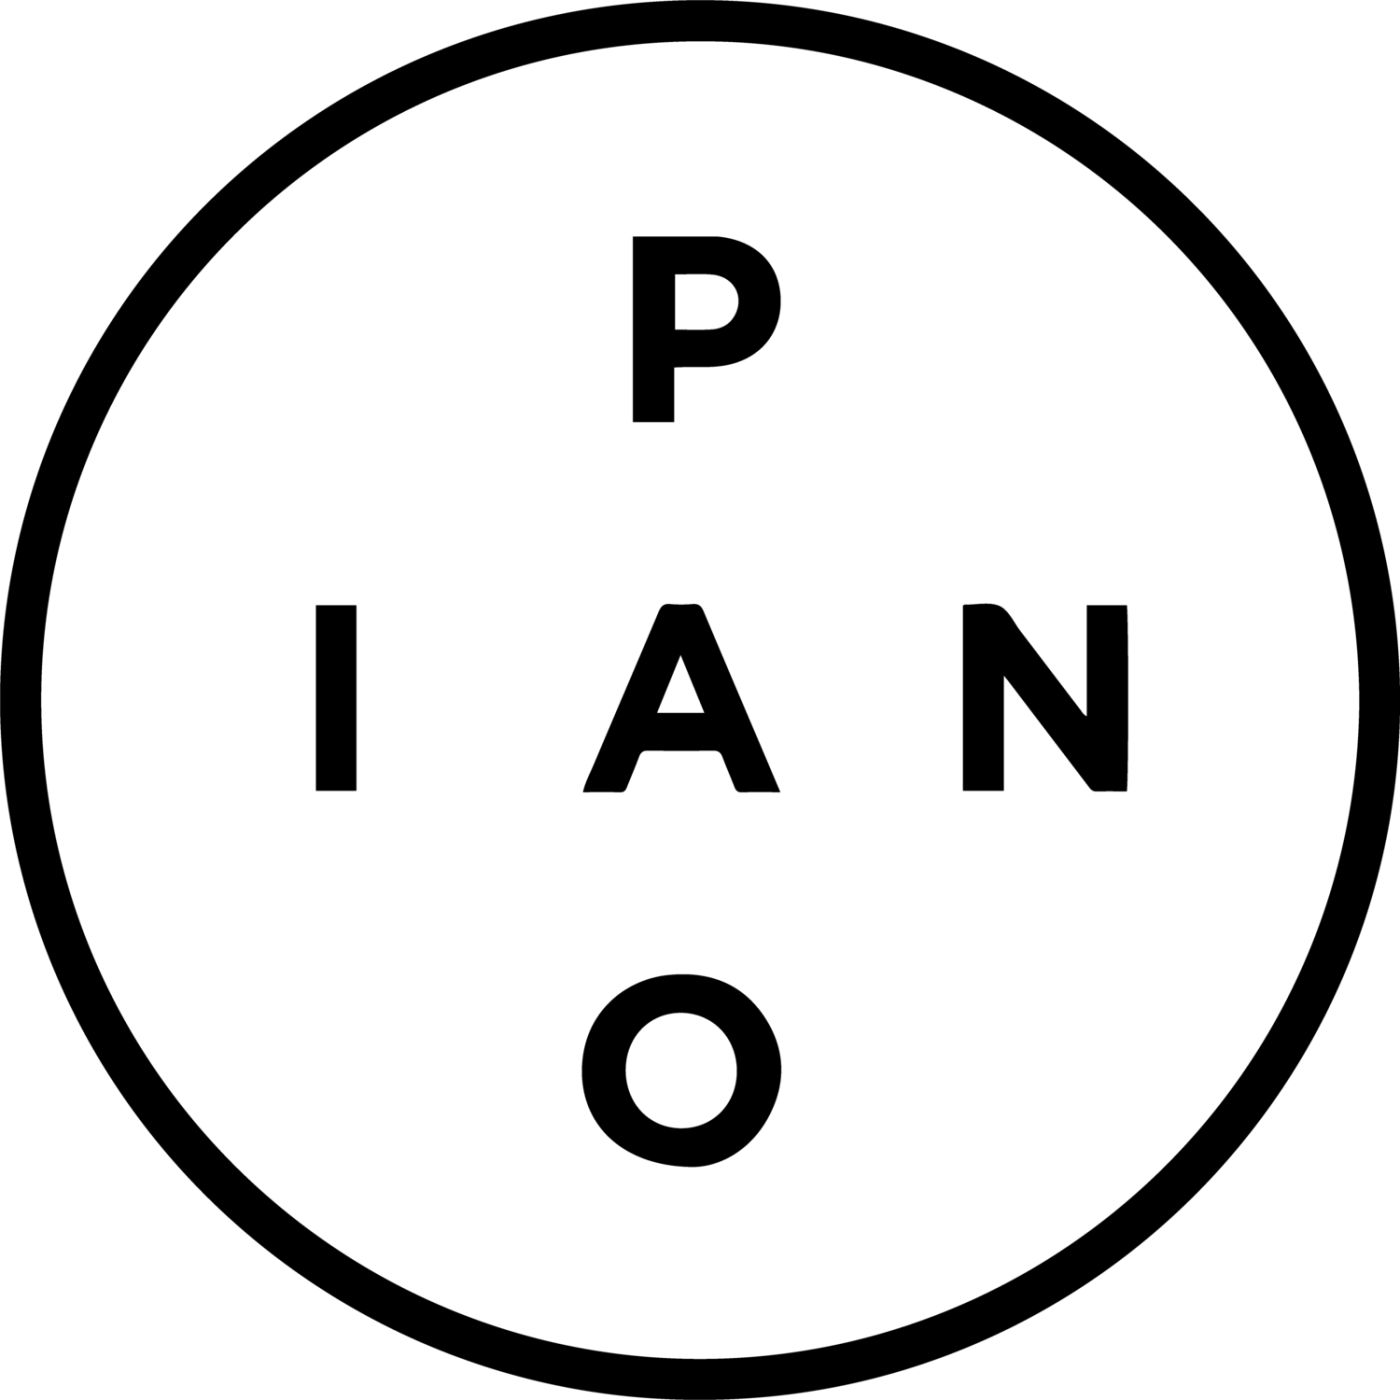 PIANO Logotipo Negro